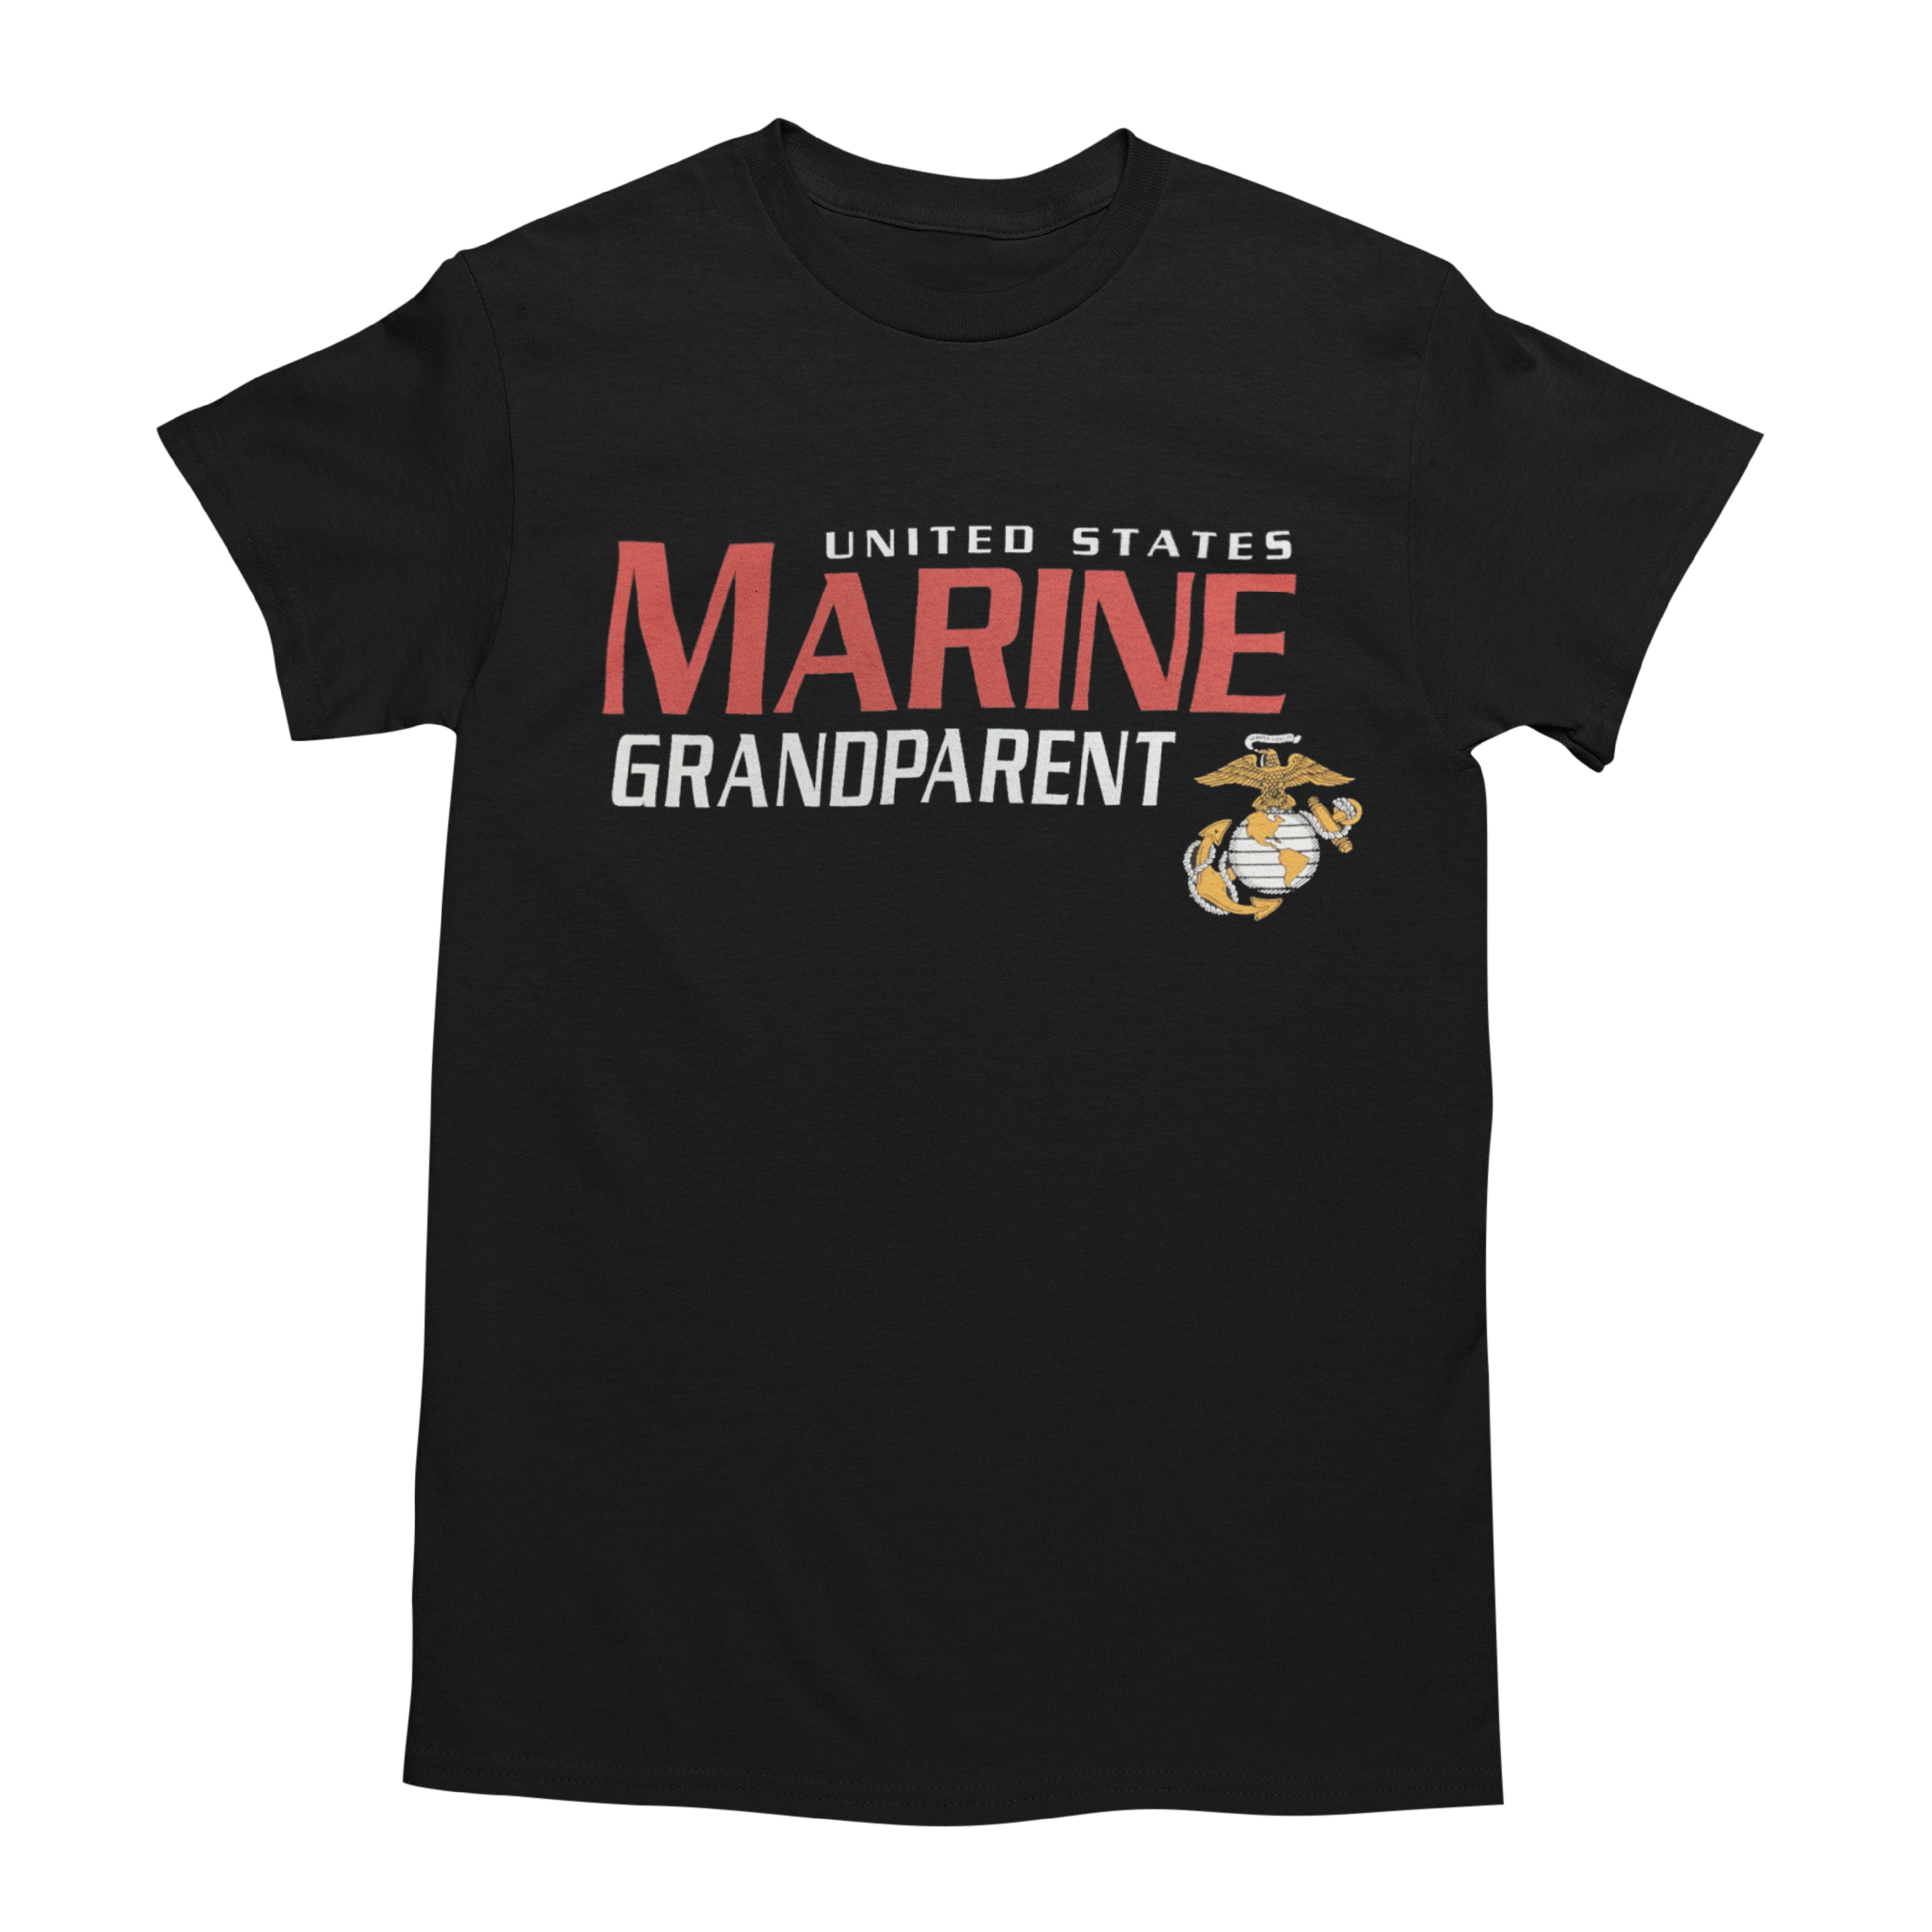 United States Marine Grandparent T-Shirt (Black)